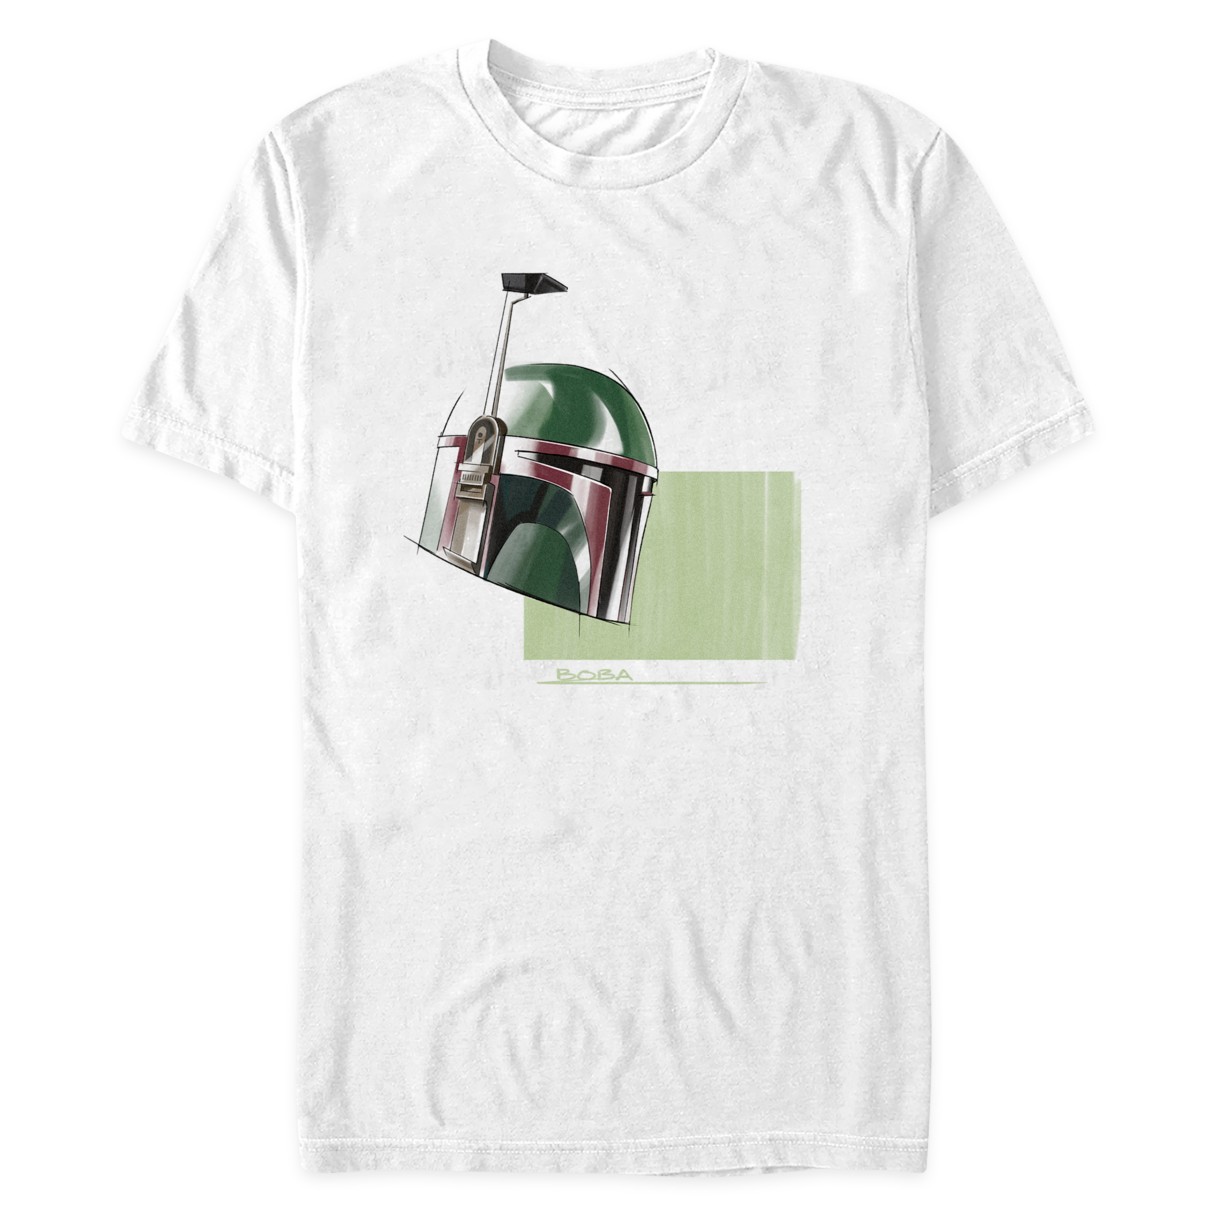 Boba Fett Helmet T-Shirt for Adults – Star Wars